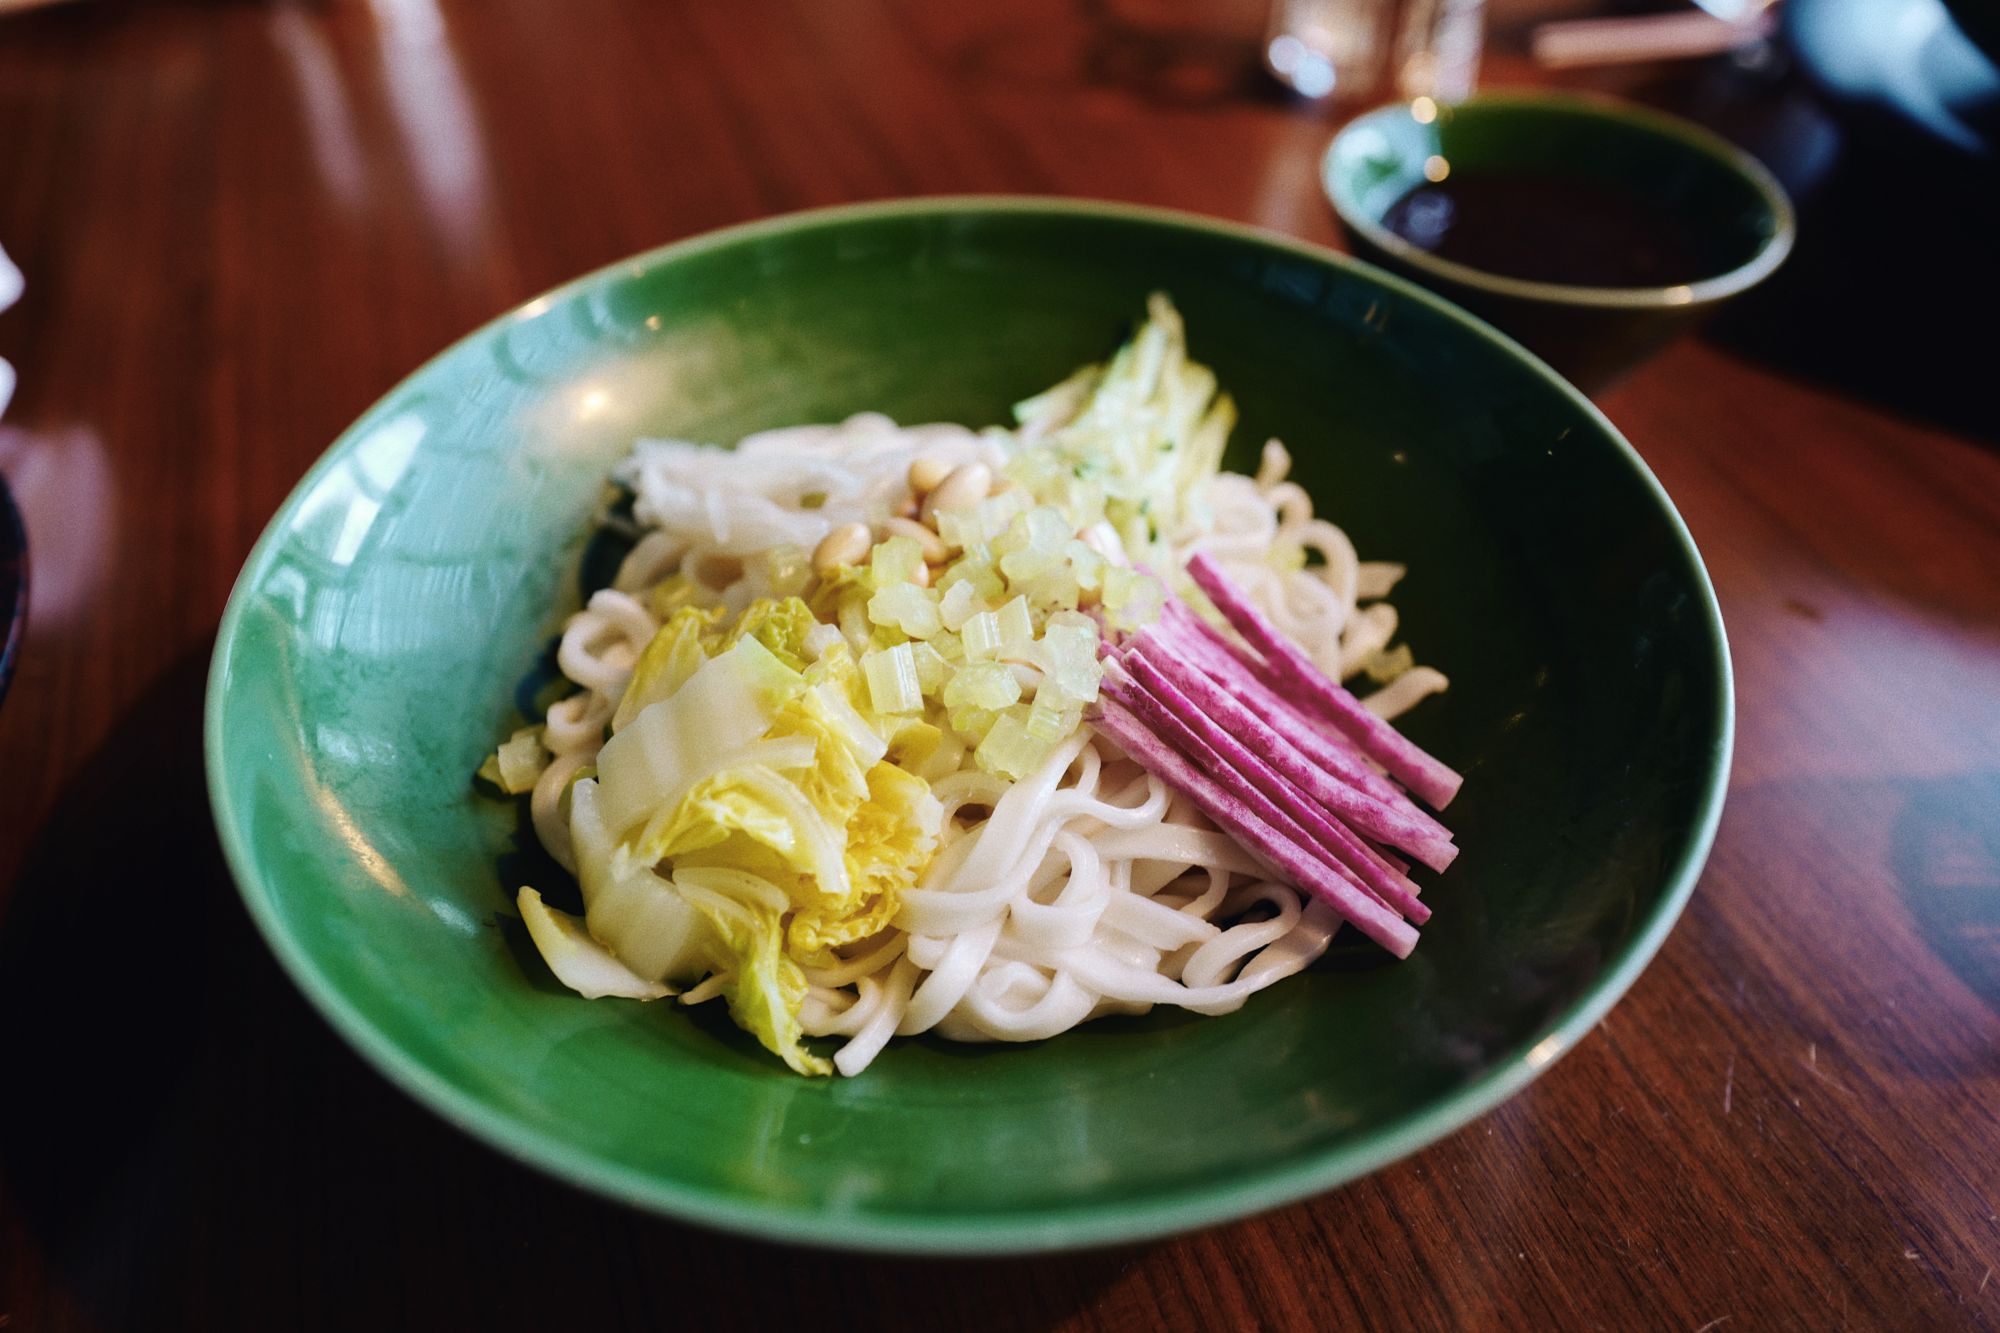 handmade-noodles-braised-pork-sliced-vegetable-Beijing-Kitchen-restaurant-at-Grand-Hyatt-Macau-2